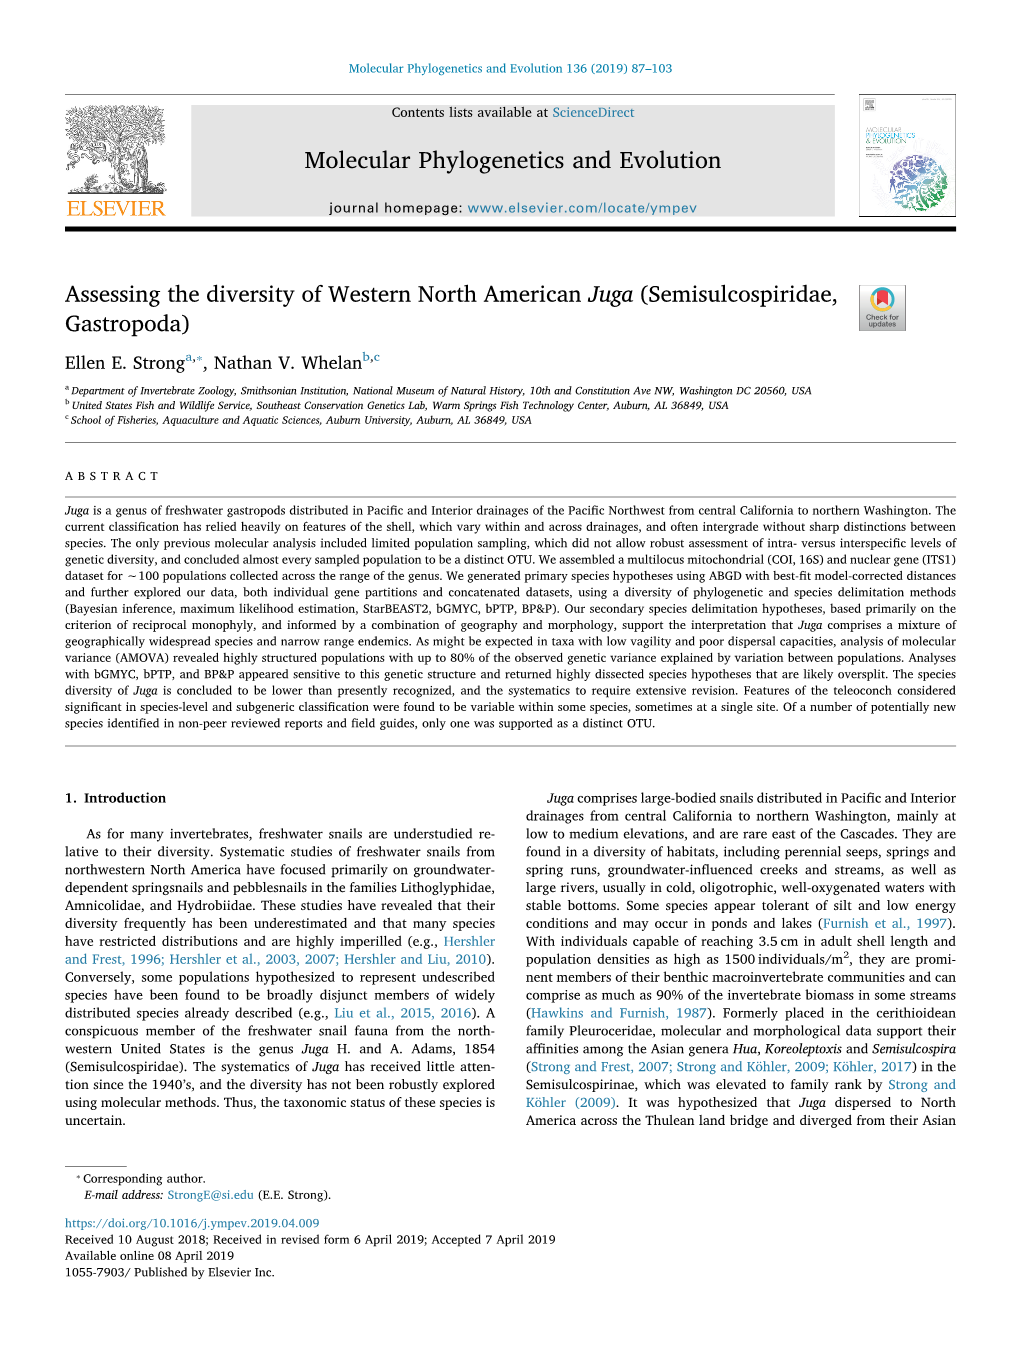 Assessing the Diversity of Western North American Juga (Semisulcospiridae, Gastropoda) T ⁎ Ellen E